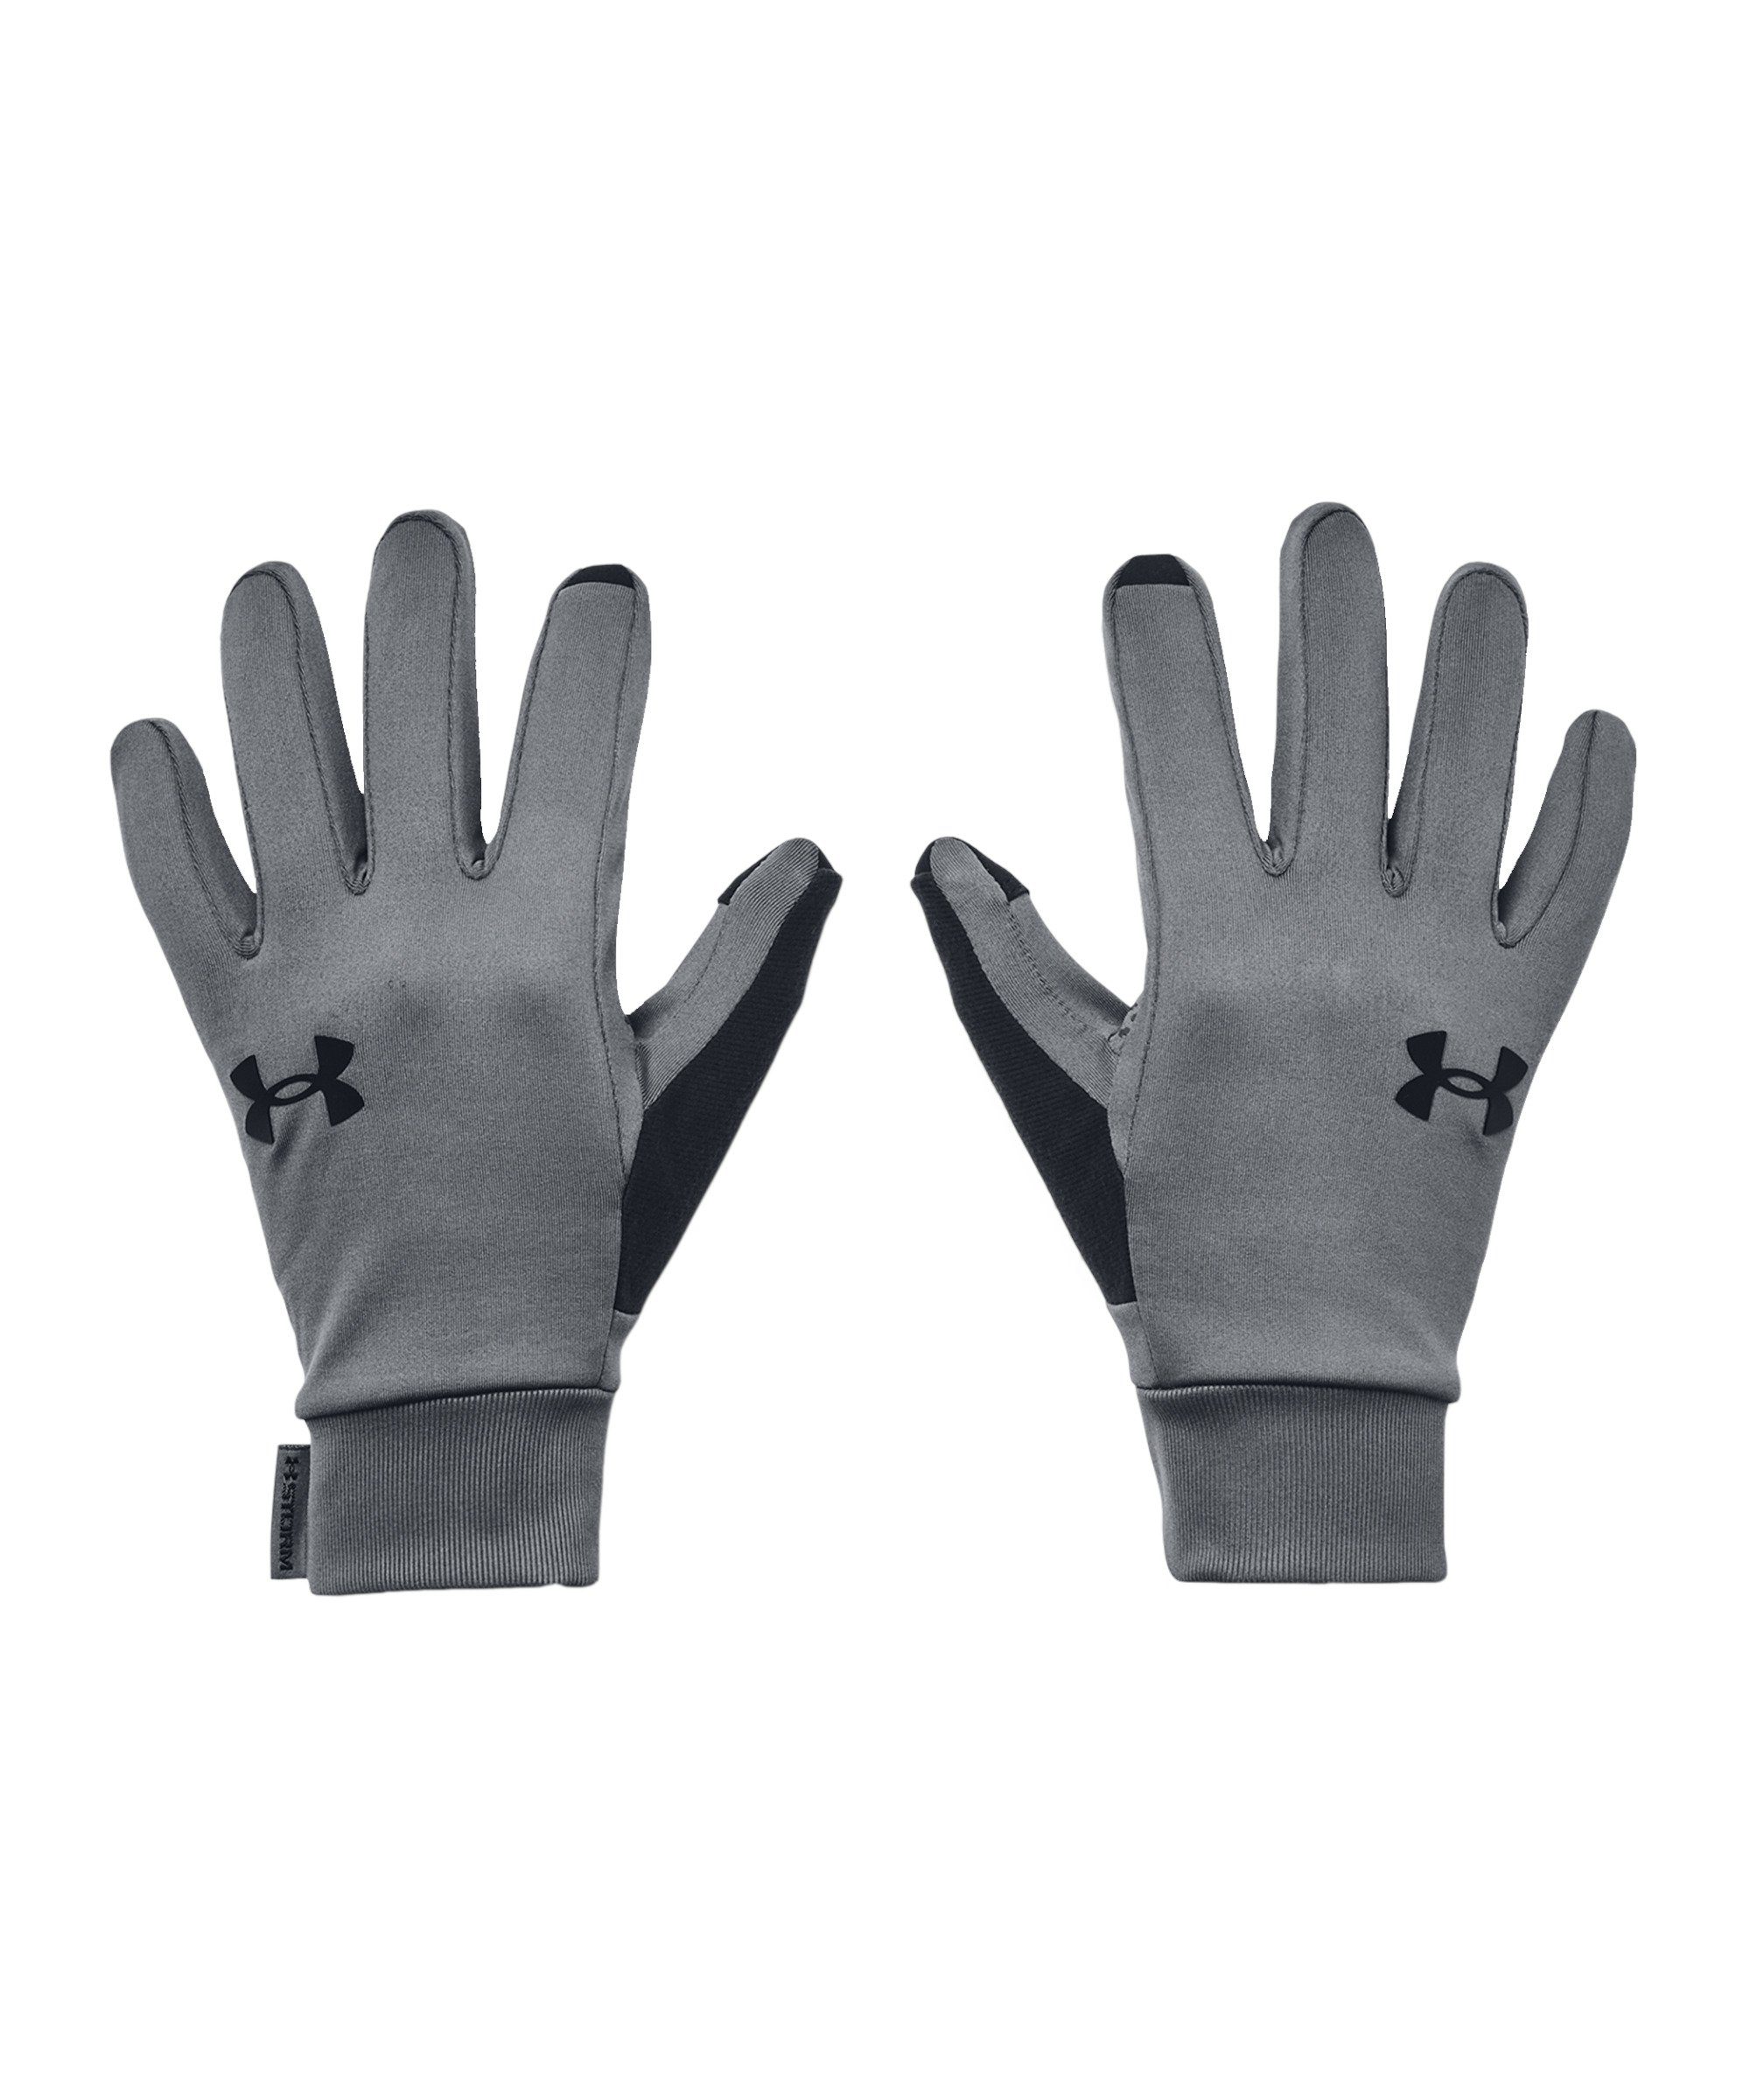 Angebotieren Under Armour® Feldspielerhandschuhe Storm grau Liner Handschuhe